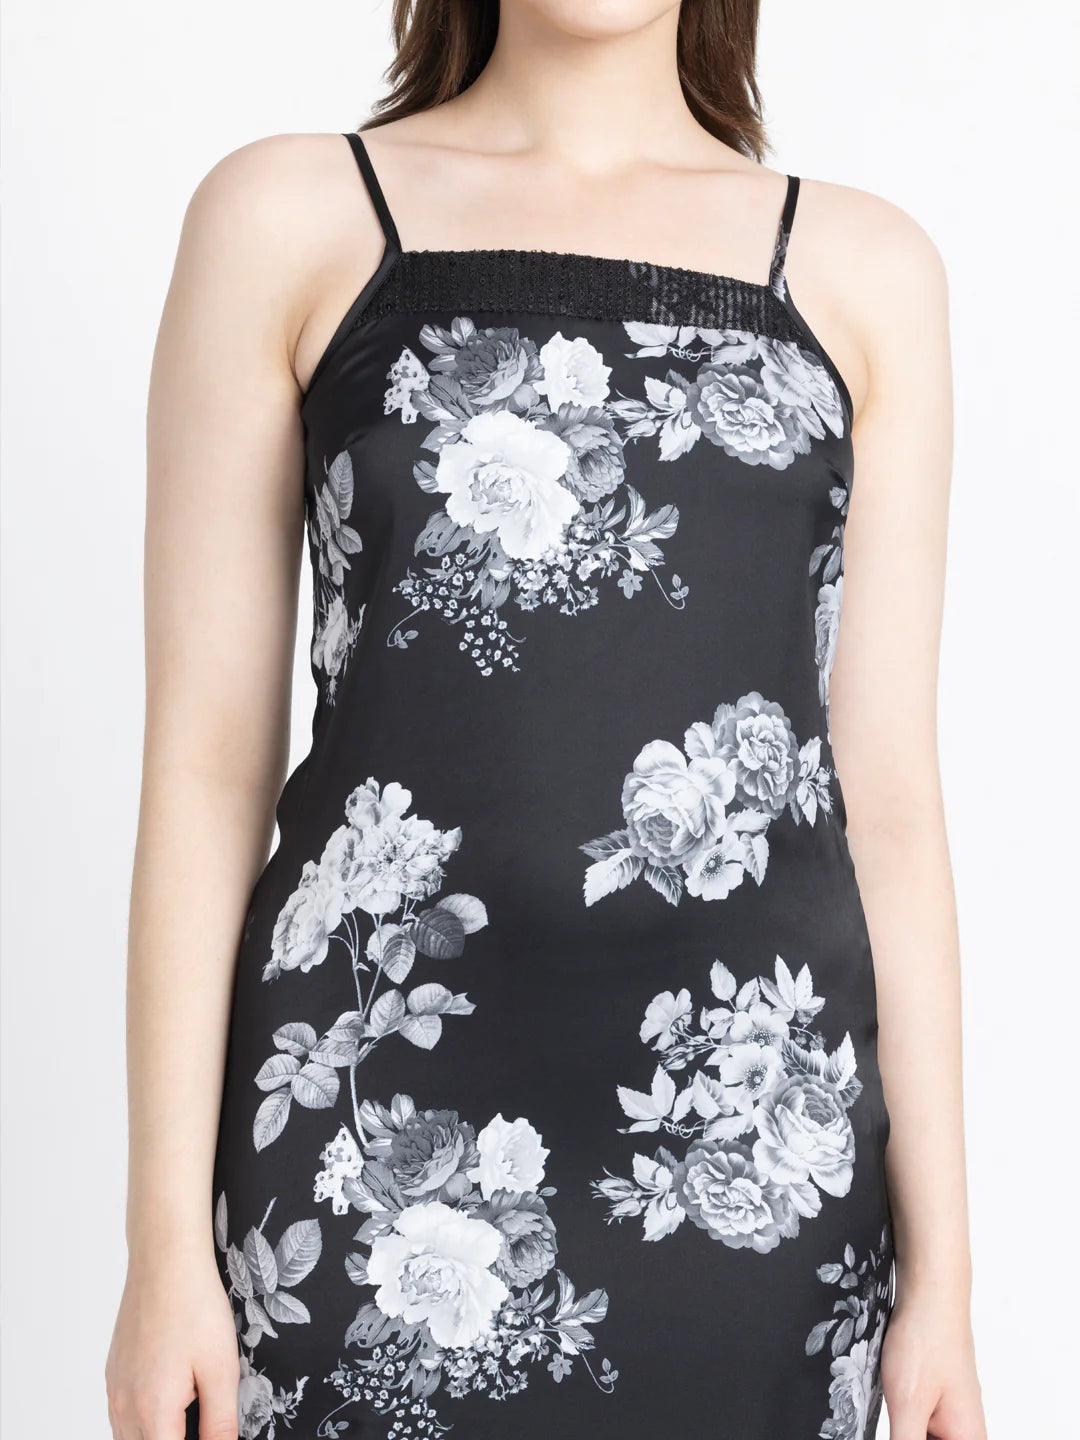 Floral Maxi Dress Monochrome | Modern Monochrome Floral Maxi Dress